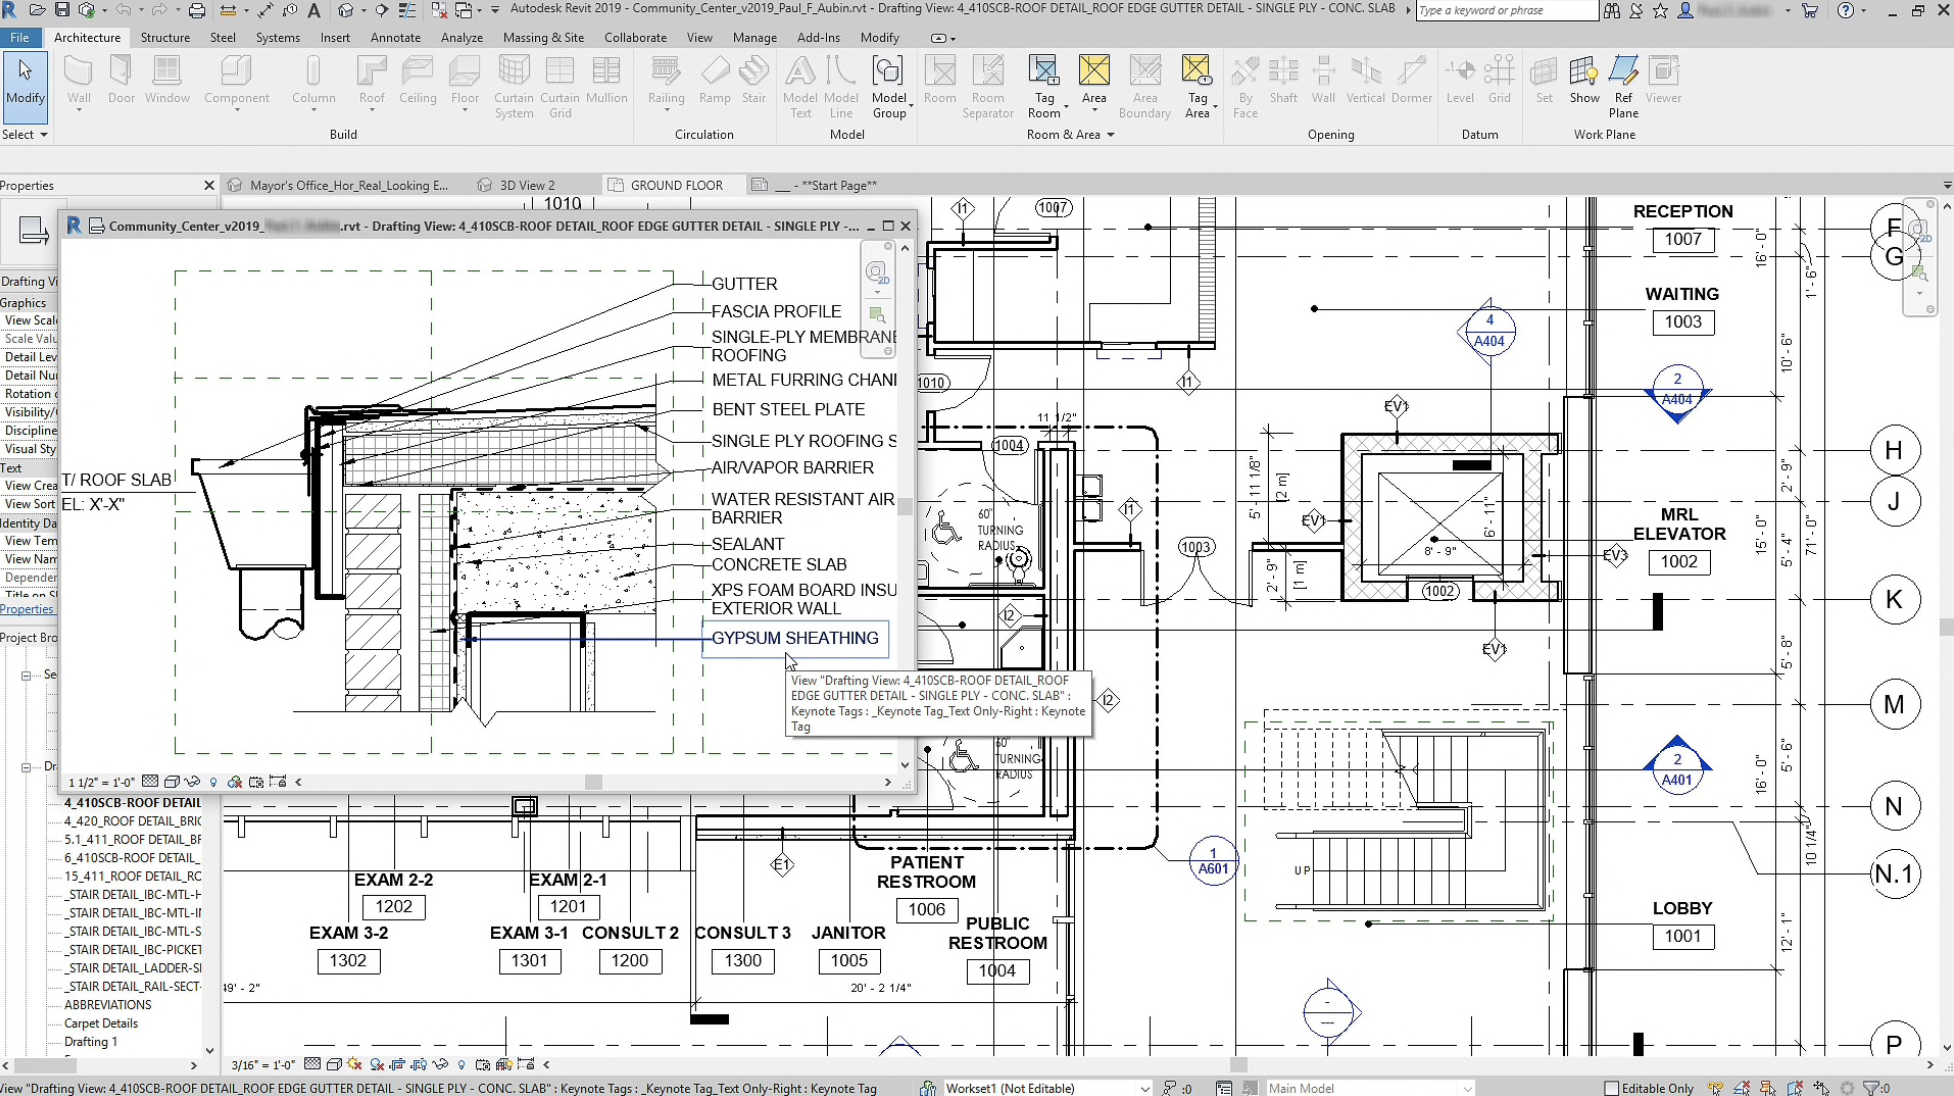 autodesk revit 2015 law office building drawings